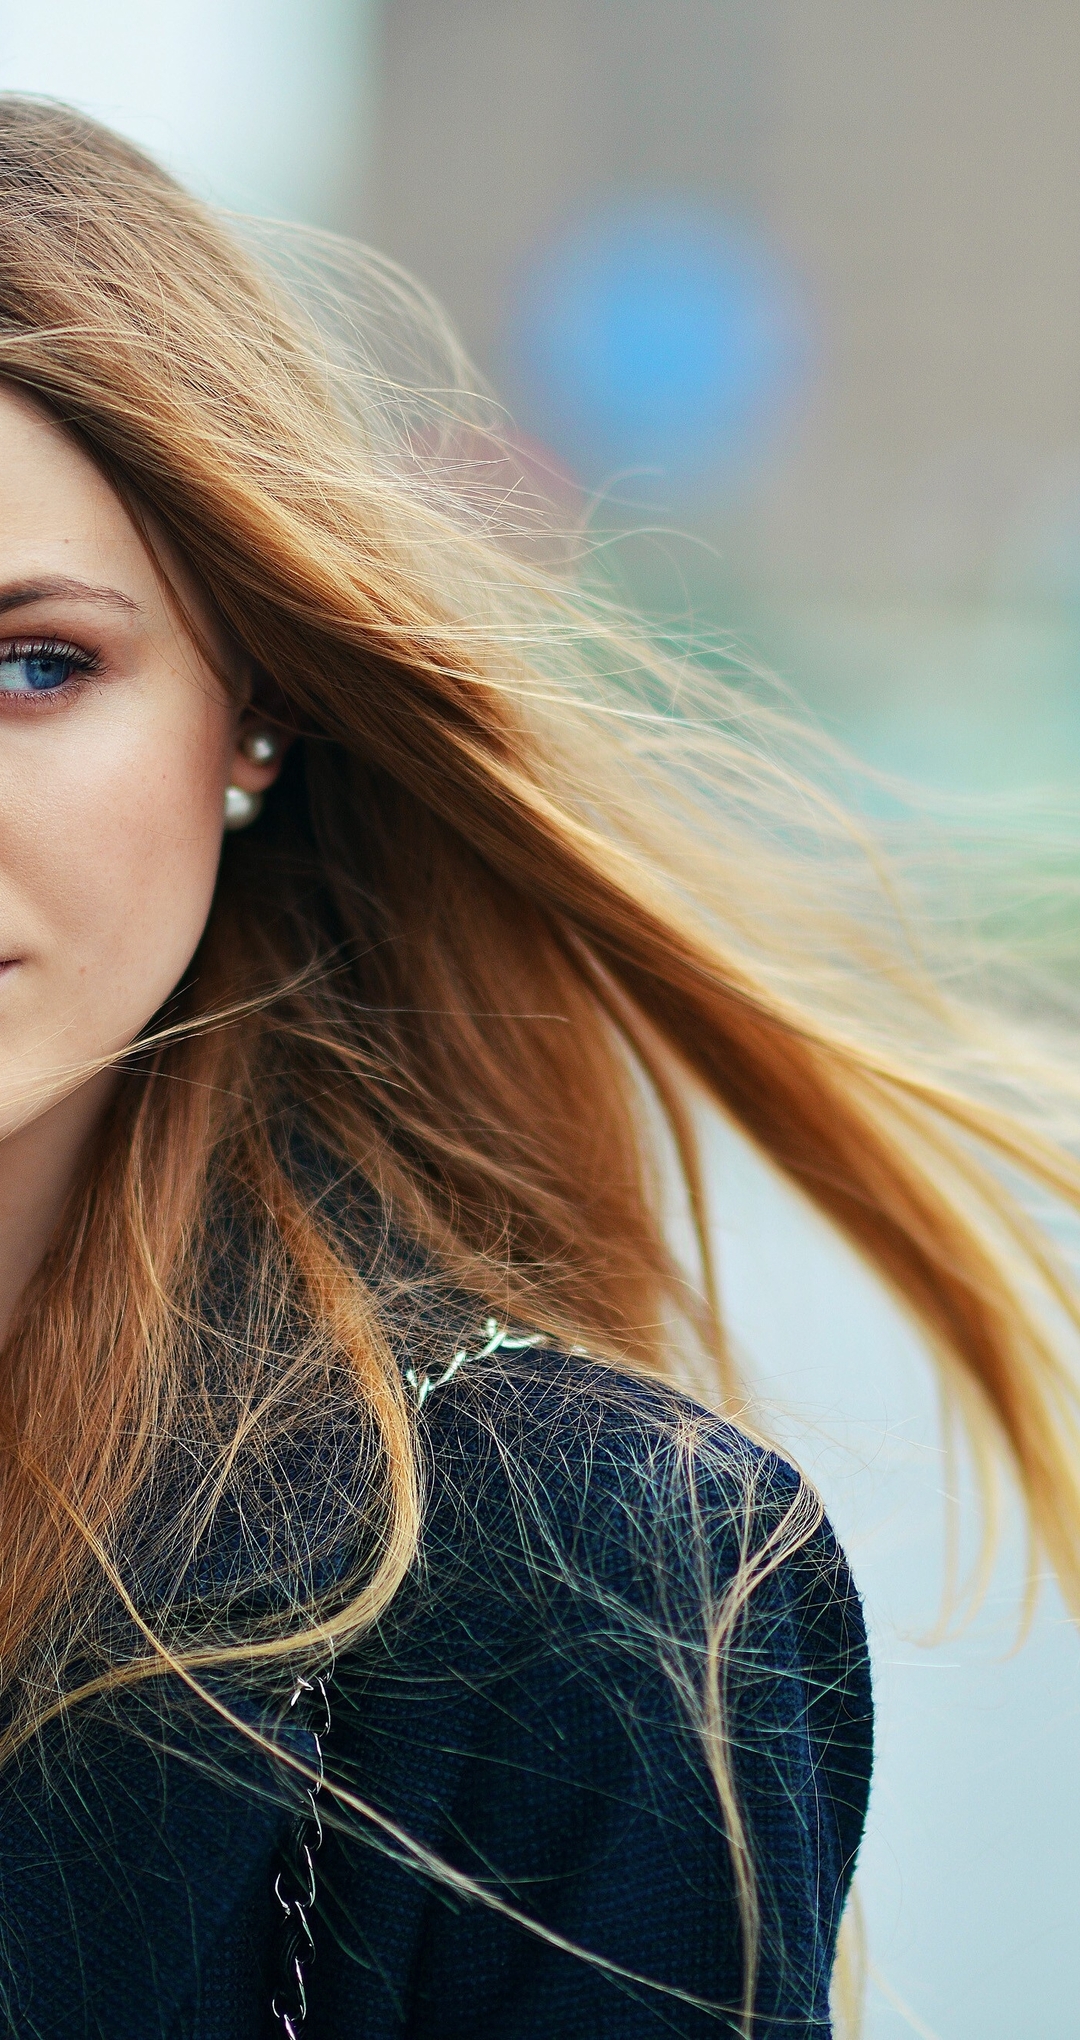 Image: Girl, Christina Bazan, blue-eyed, beautiful, look, hair, earring